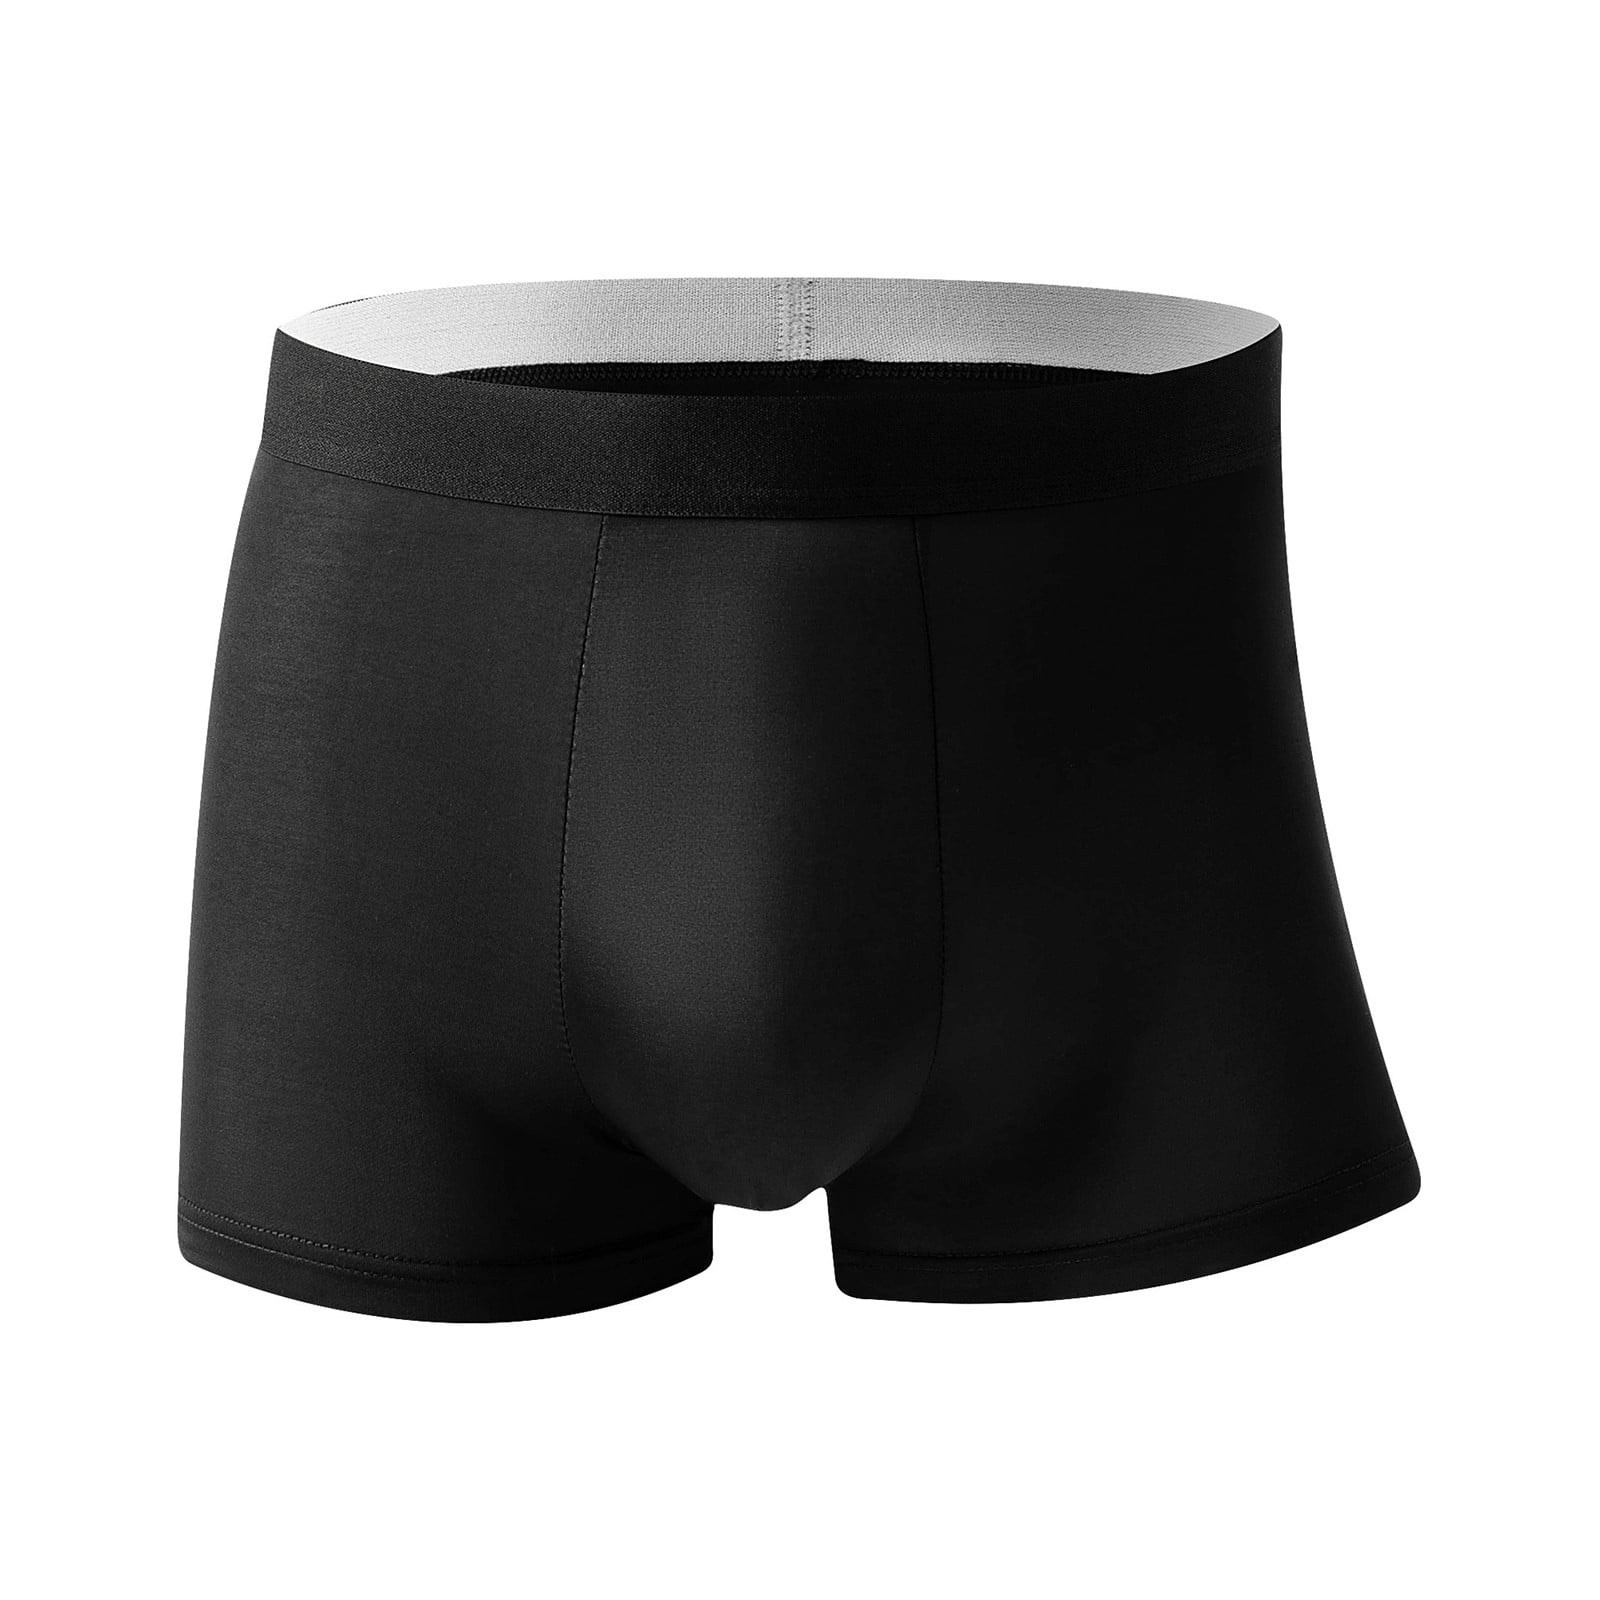 KaLI_store Briefs for Men Pack Mens Underwear Boxer Briefs Cotton Boxer ...